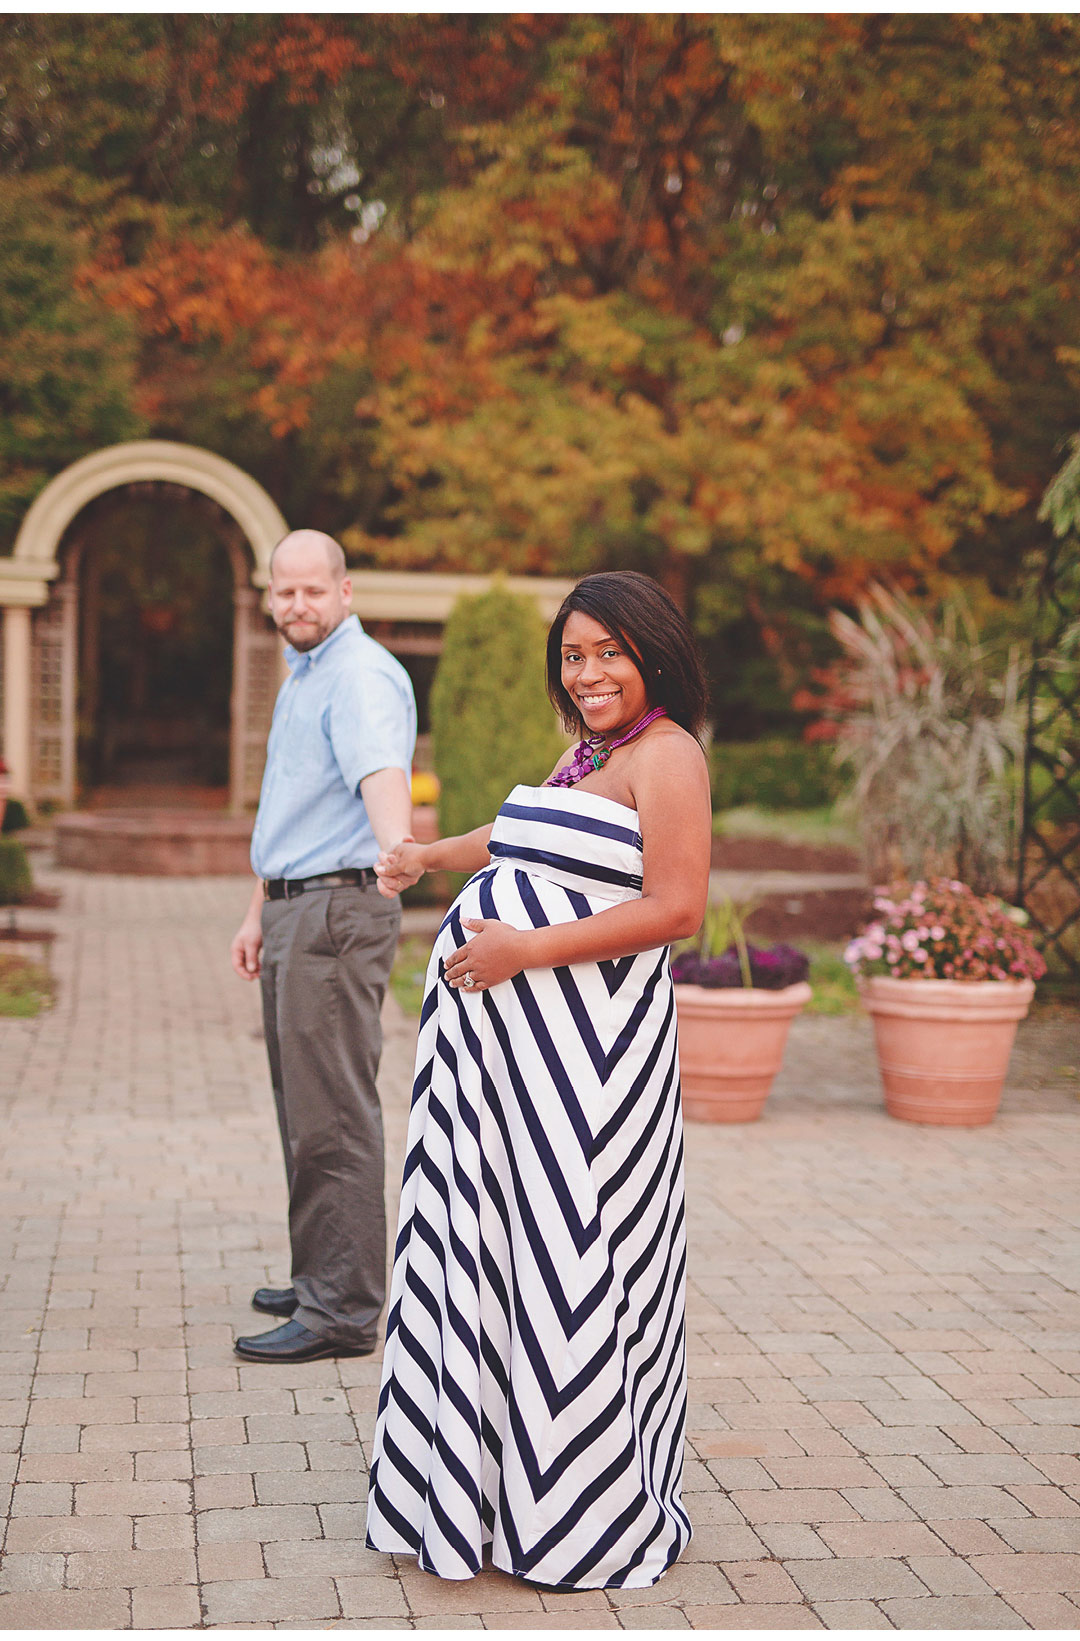 watras-dayton-pregnancy-baby-photography-9.jpg